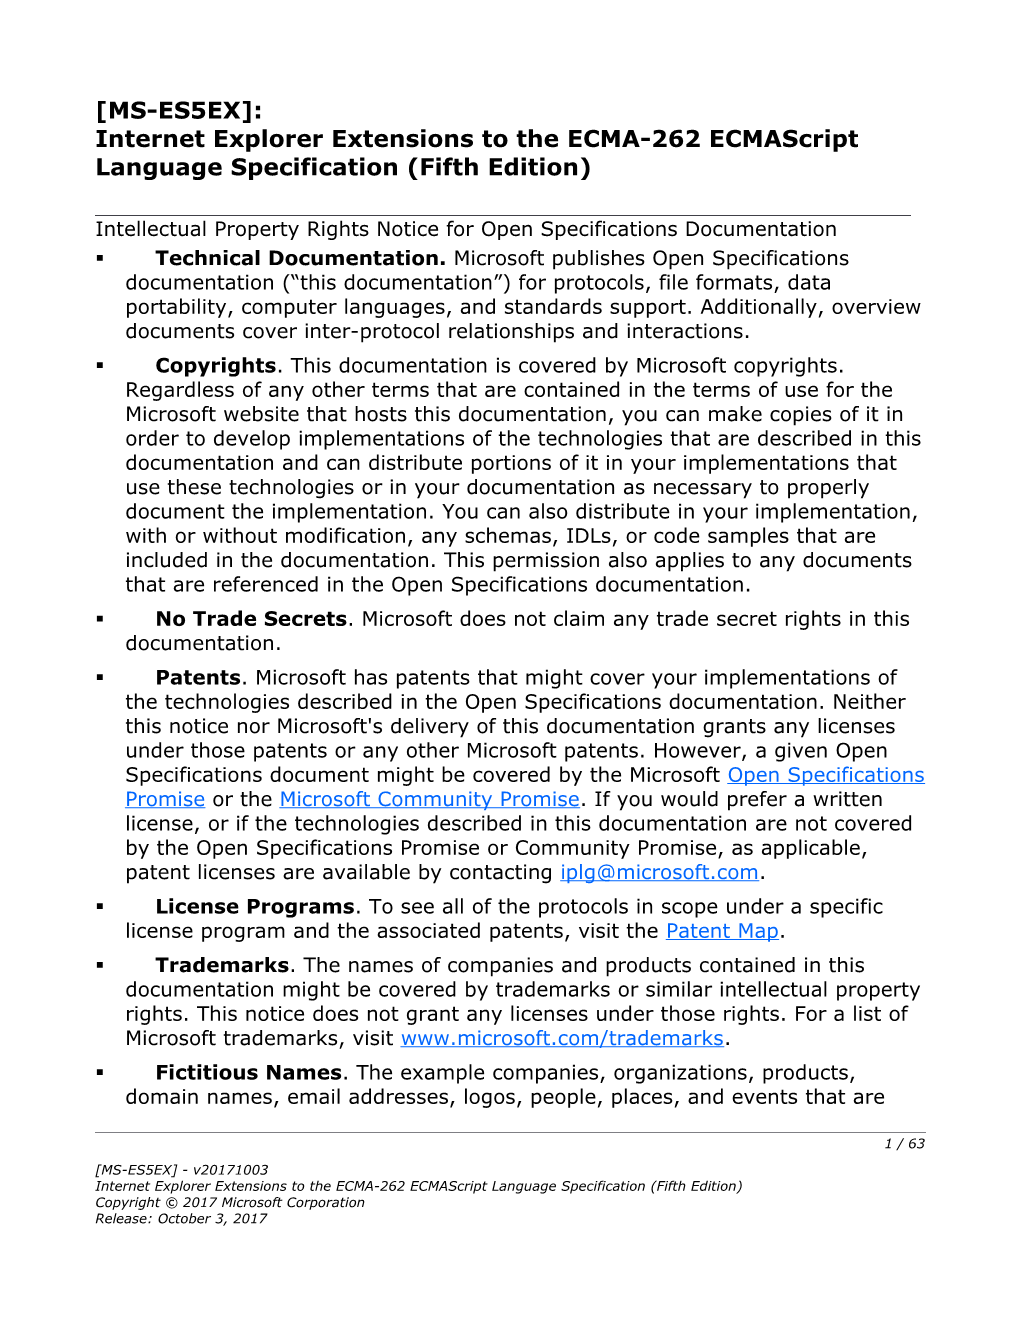 Internet Explorer Extensions to the ECMA-262 Ecmascript Language Specification (Fifth Edition)